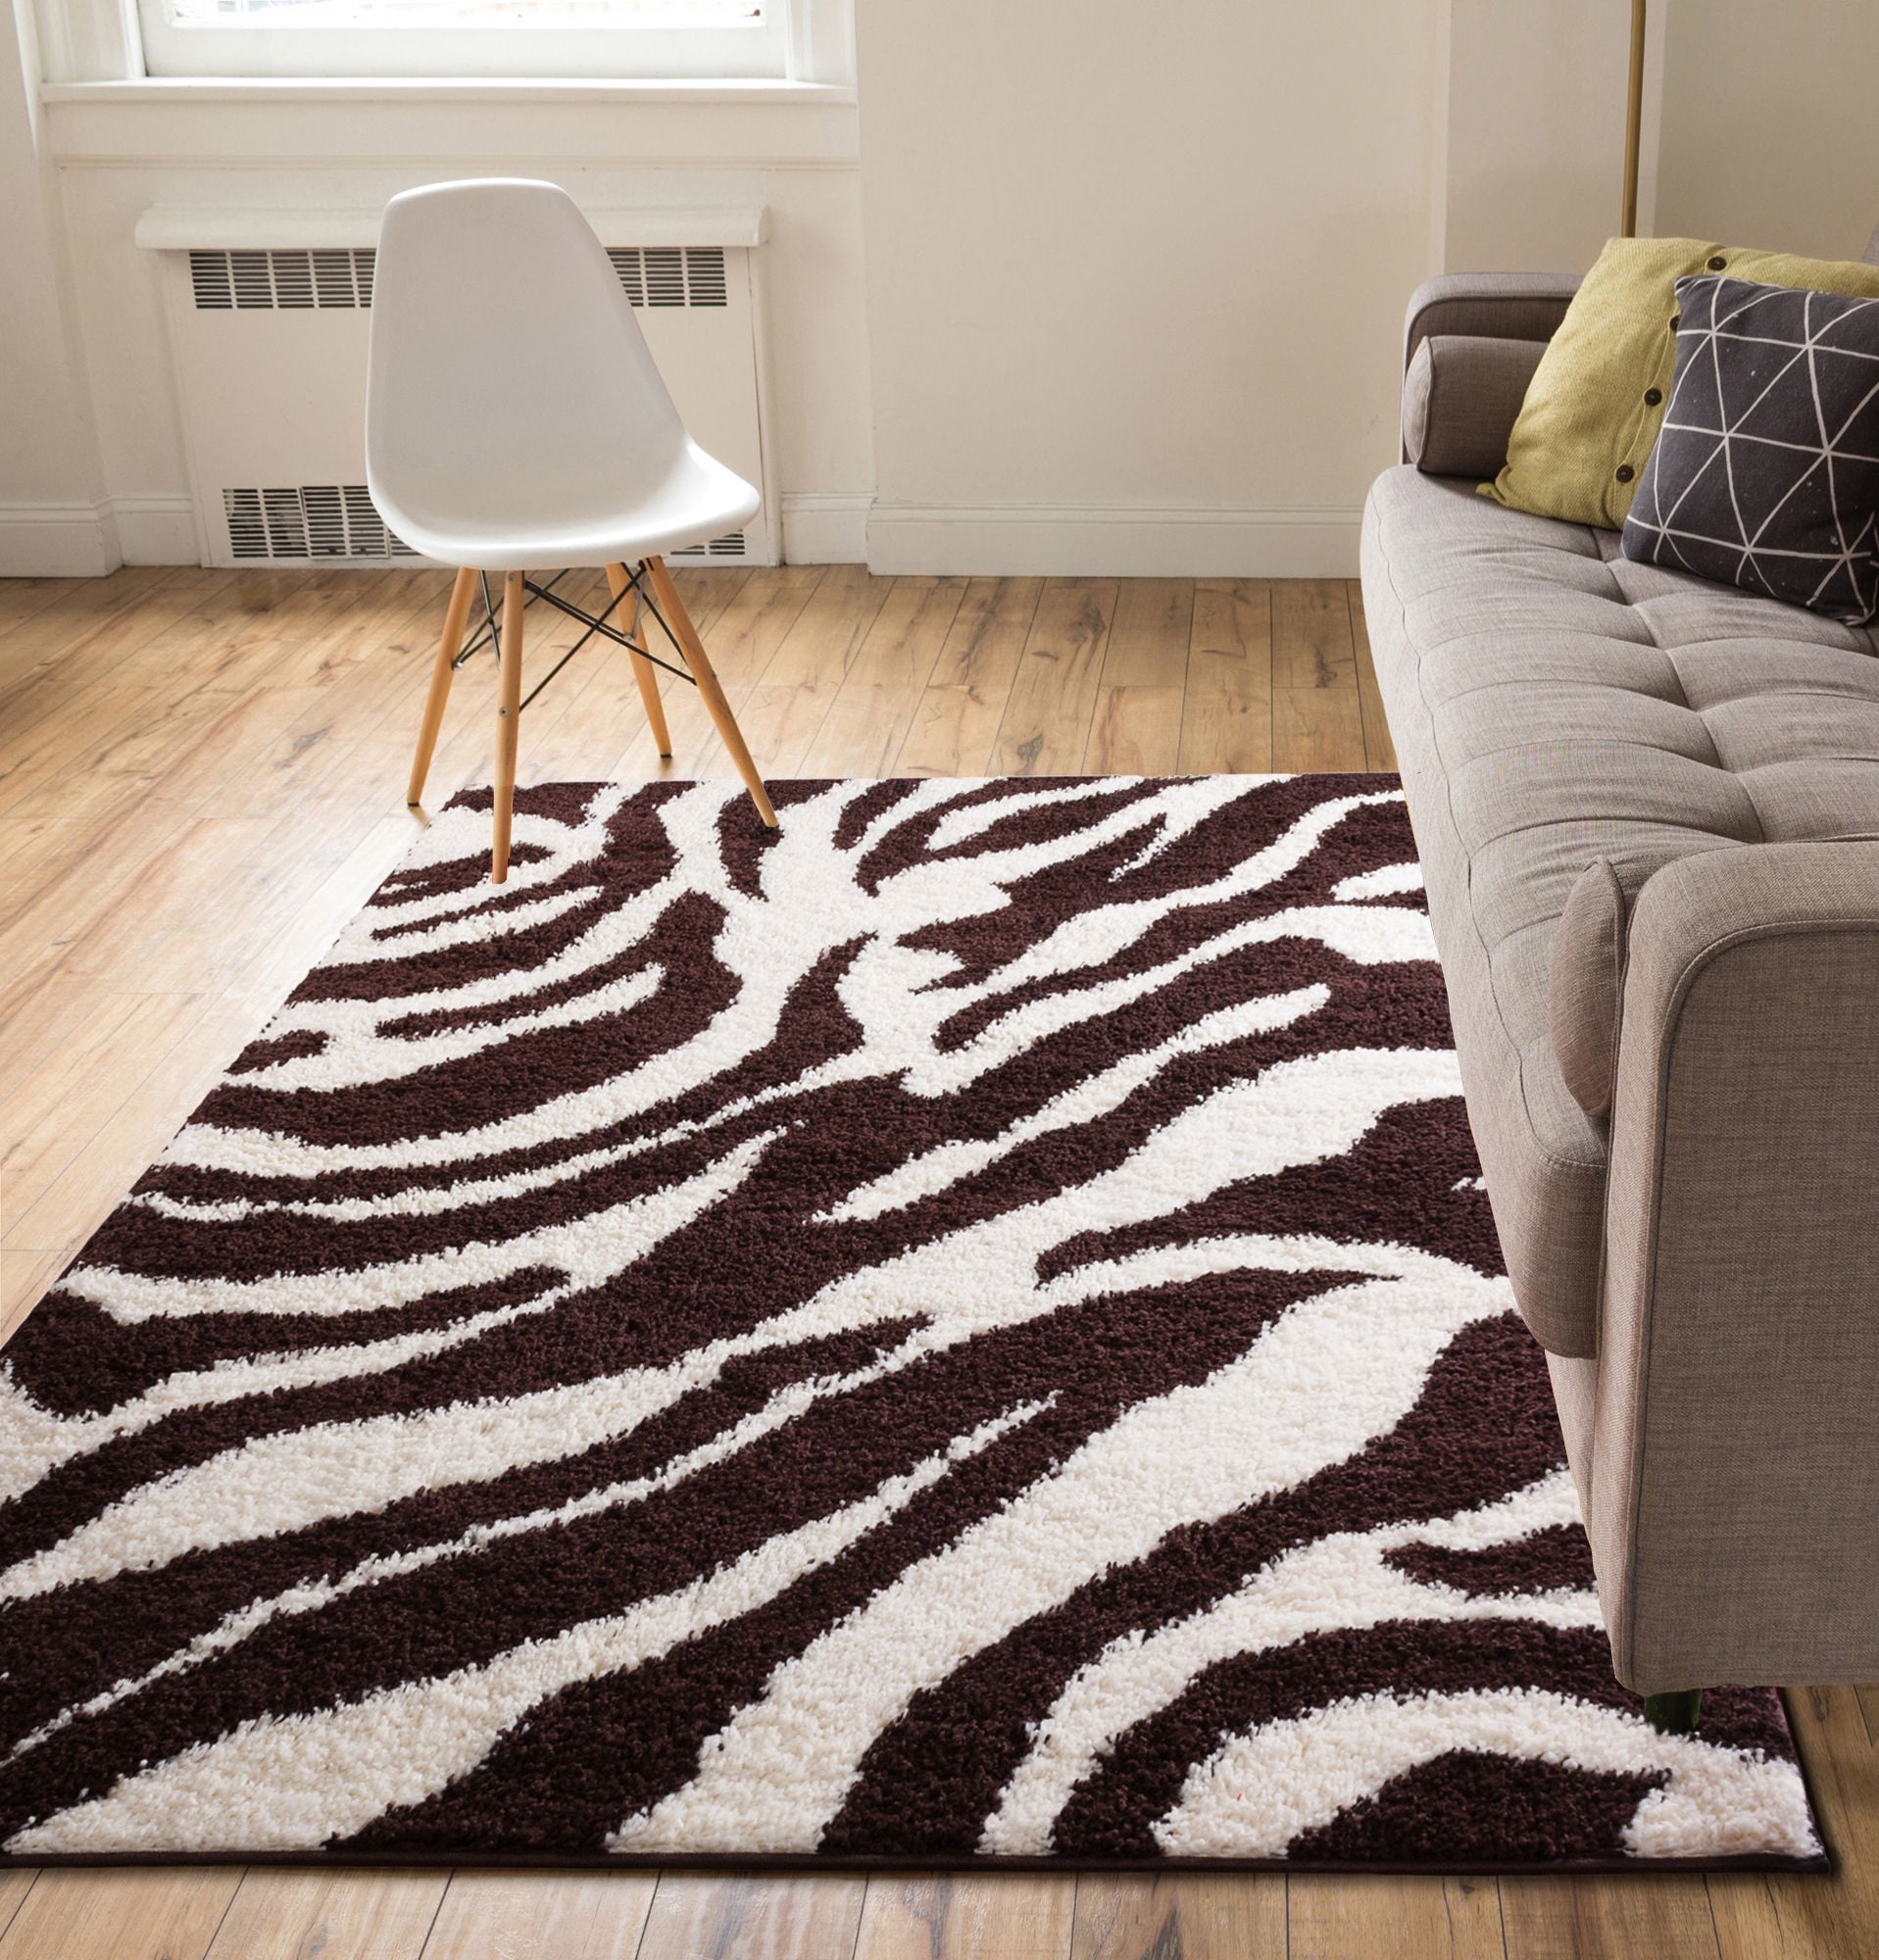 Modern Animal Print 5x7 ( 5' x 7'2'' ) Area Rug Shag Zebra Brown Ivory  Plush Easy Care Thick Soft Plush Living Room